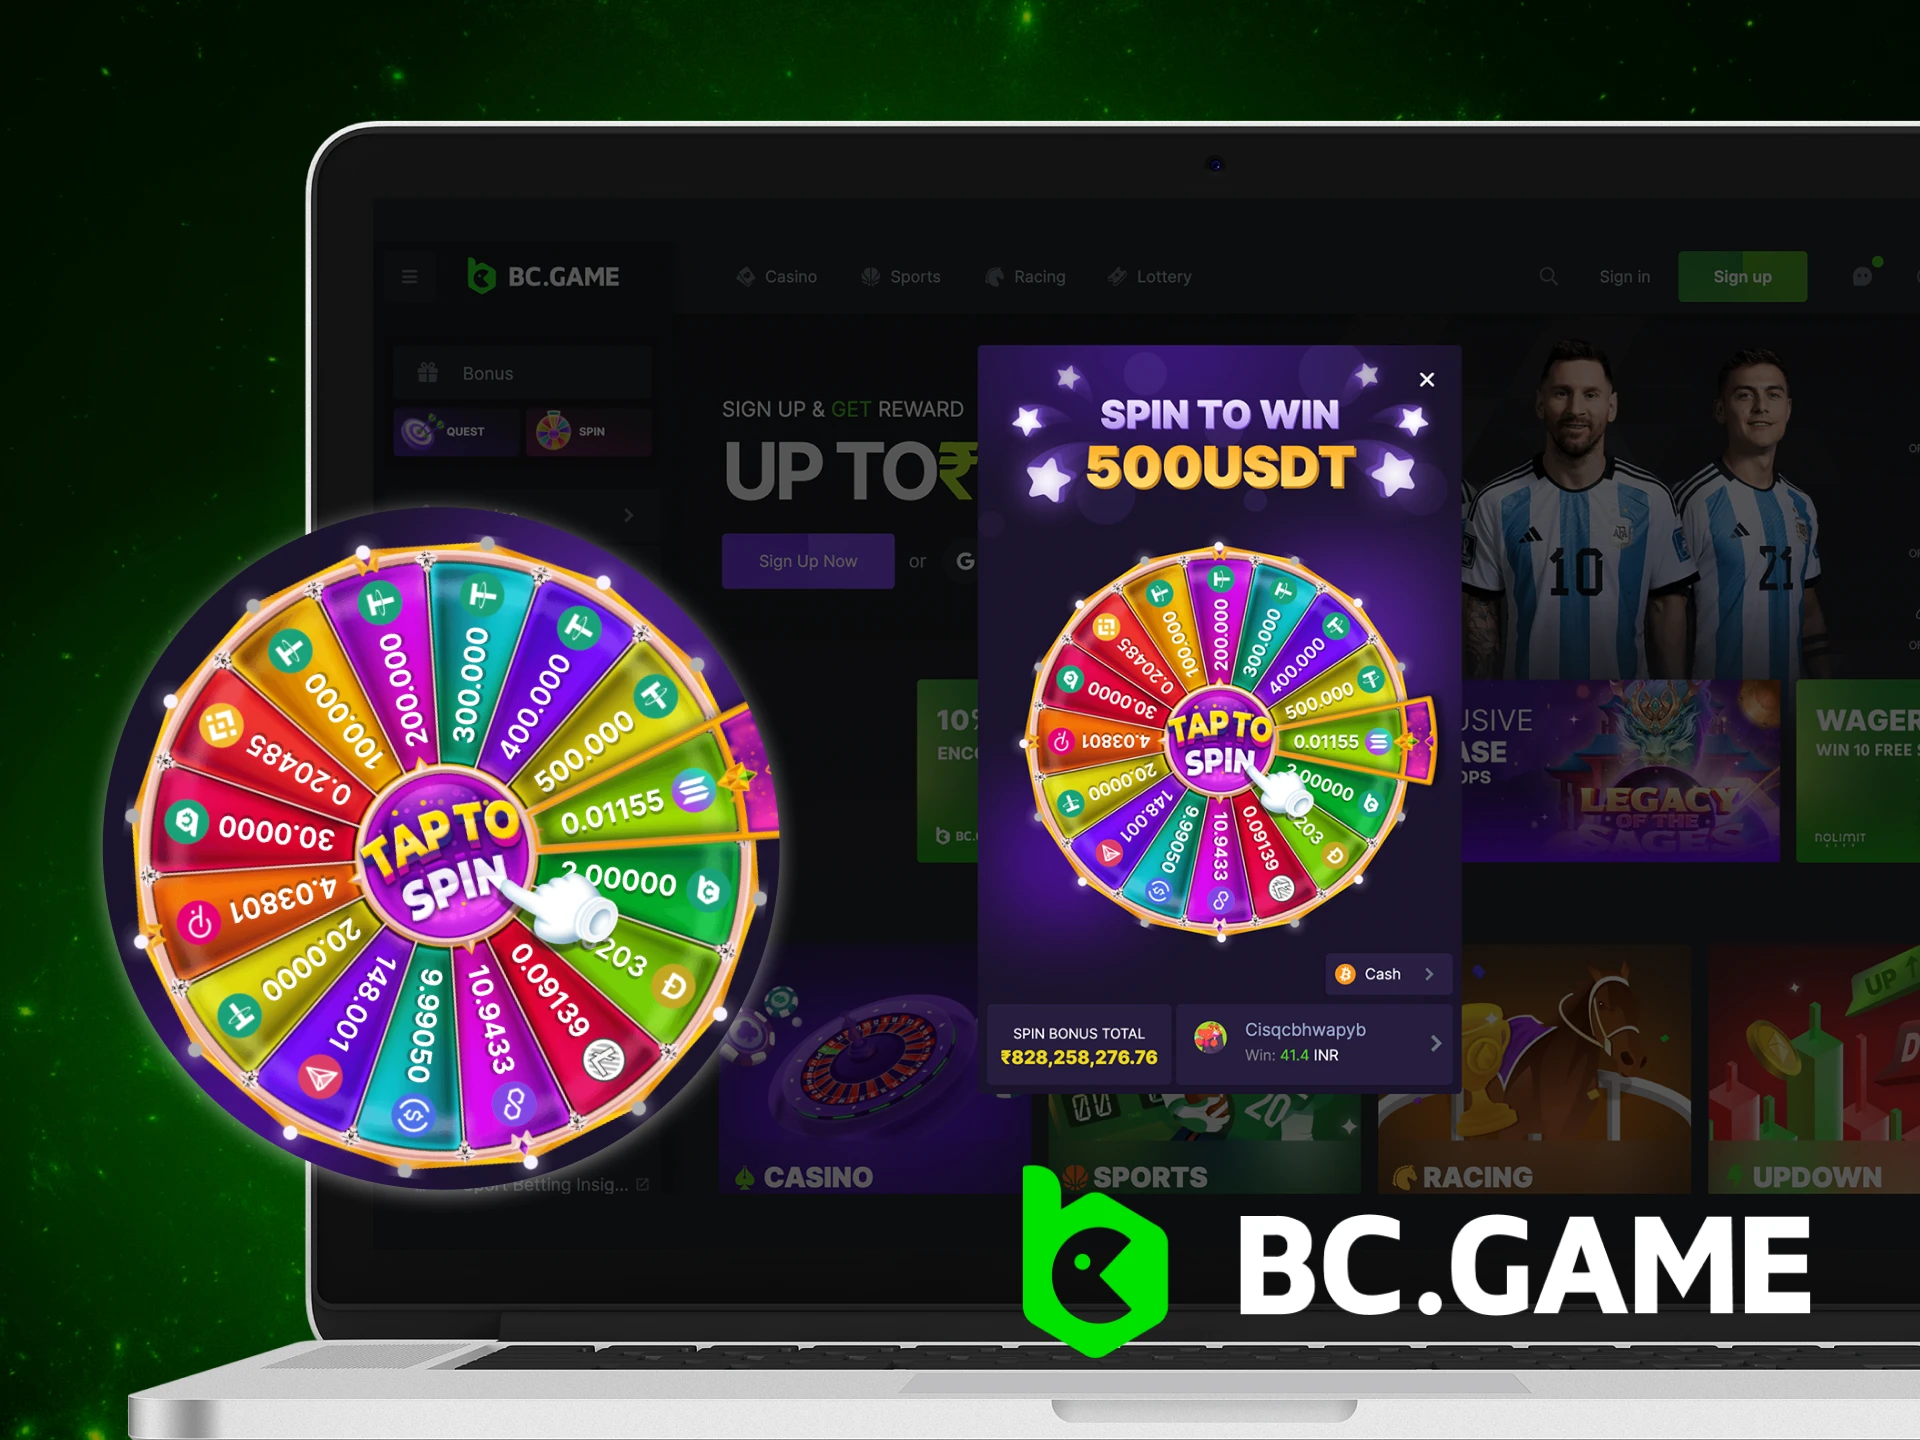 BC Game Lucky Spin bonus information.